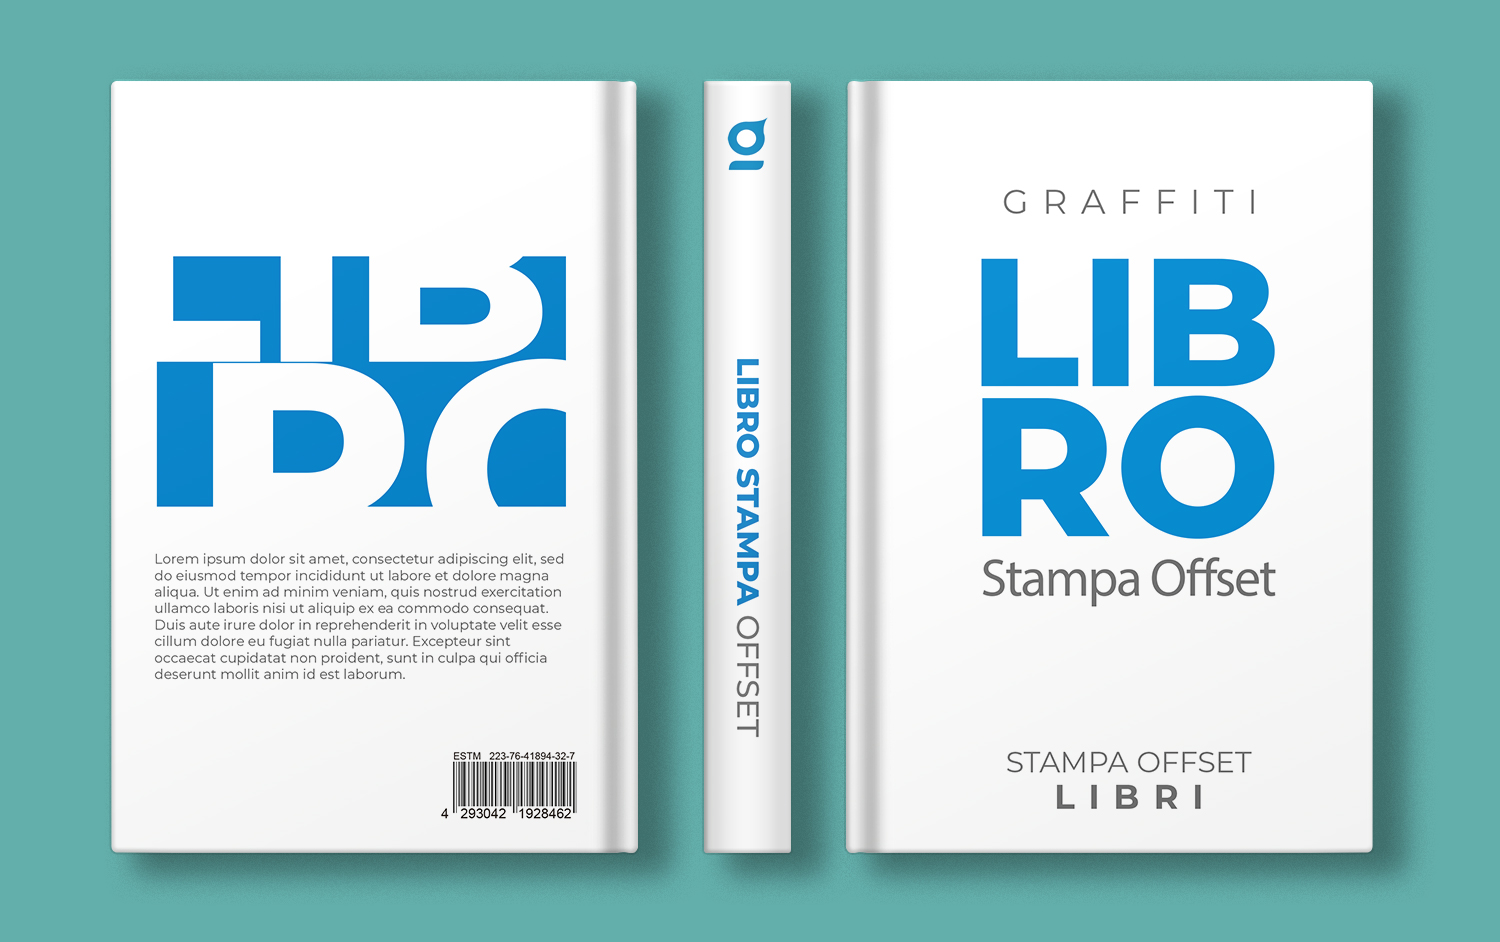 Graffiti - tipografia - stampa Offset - Libri